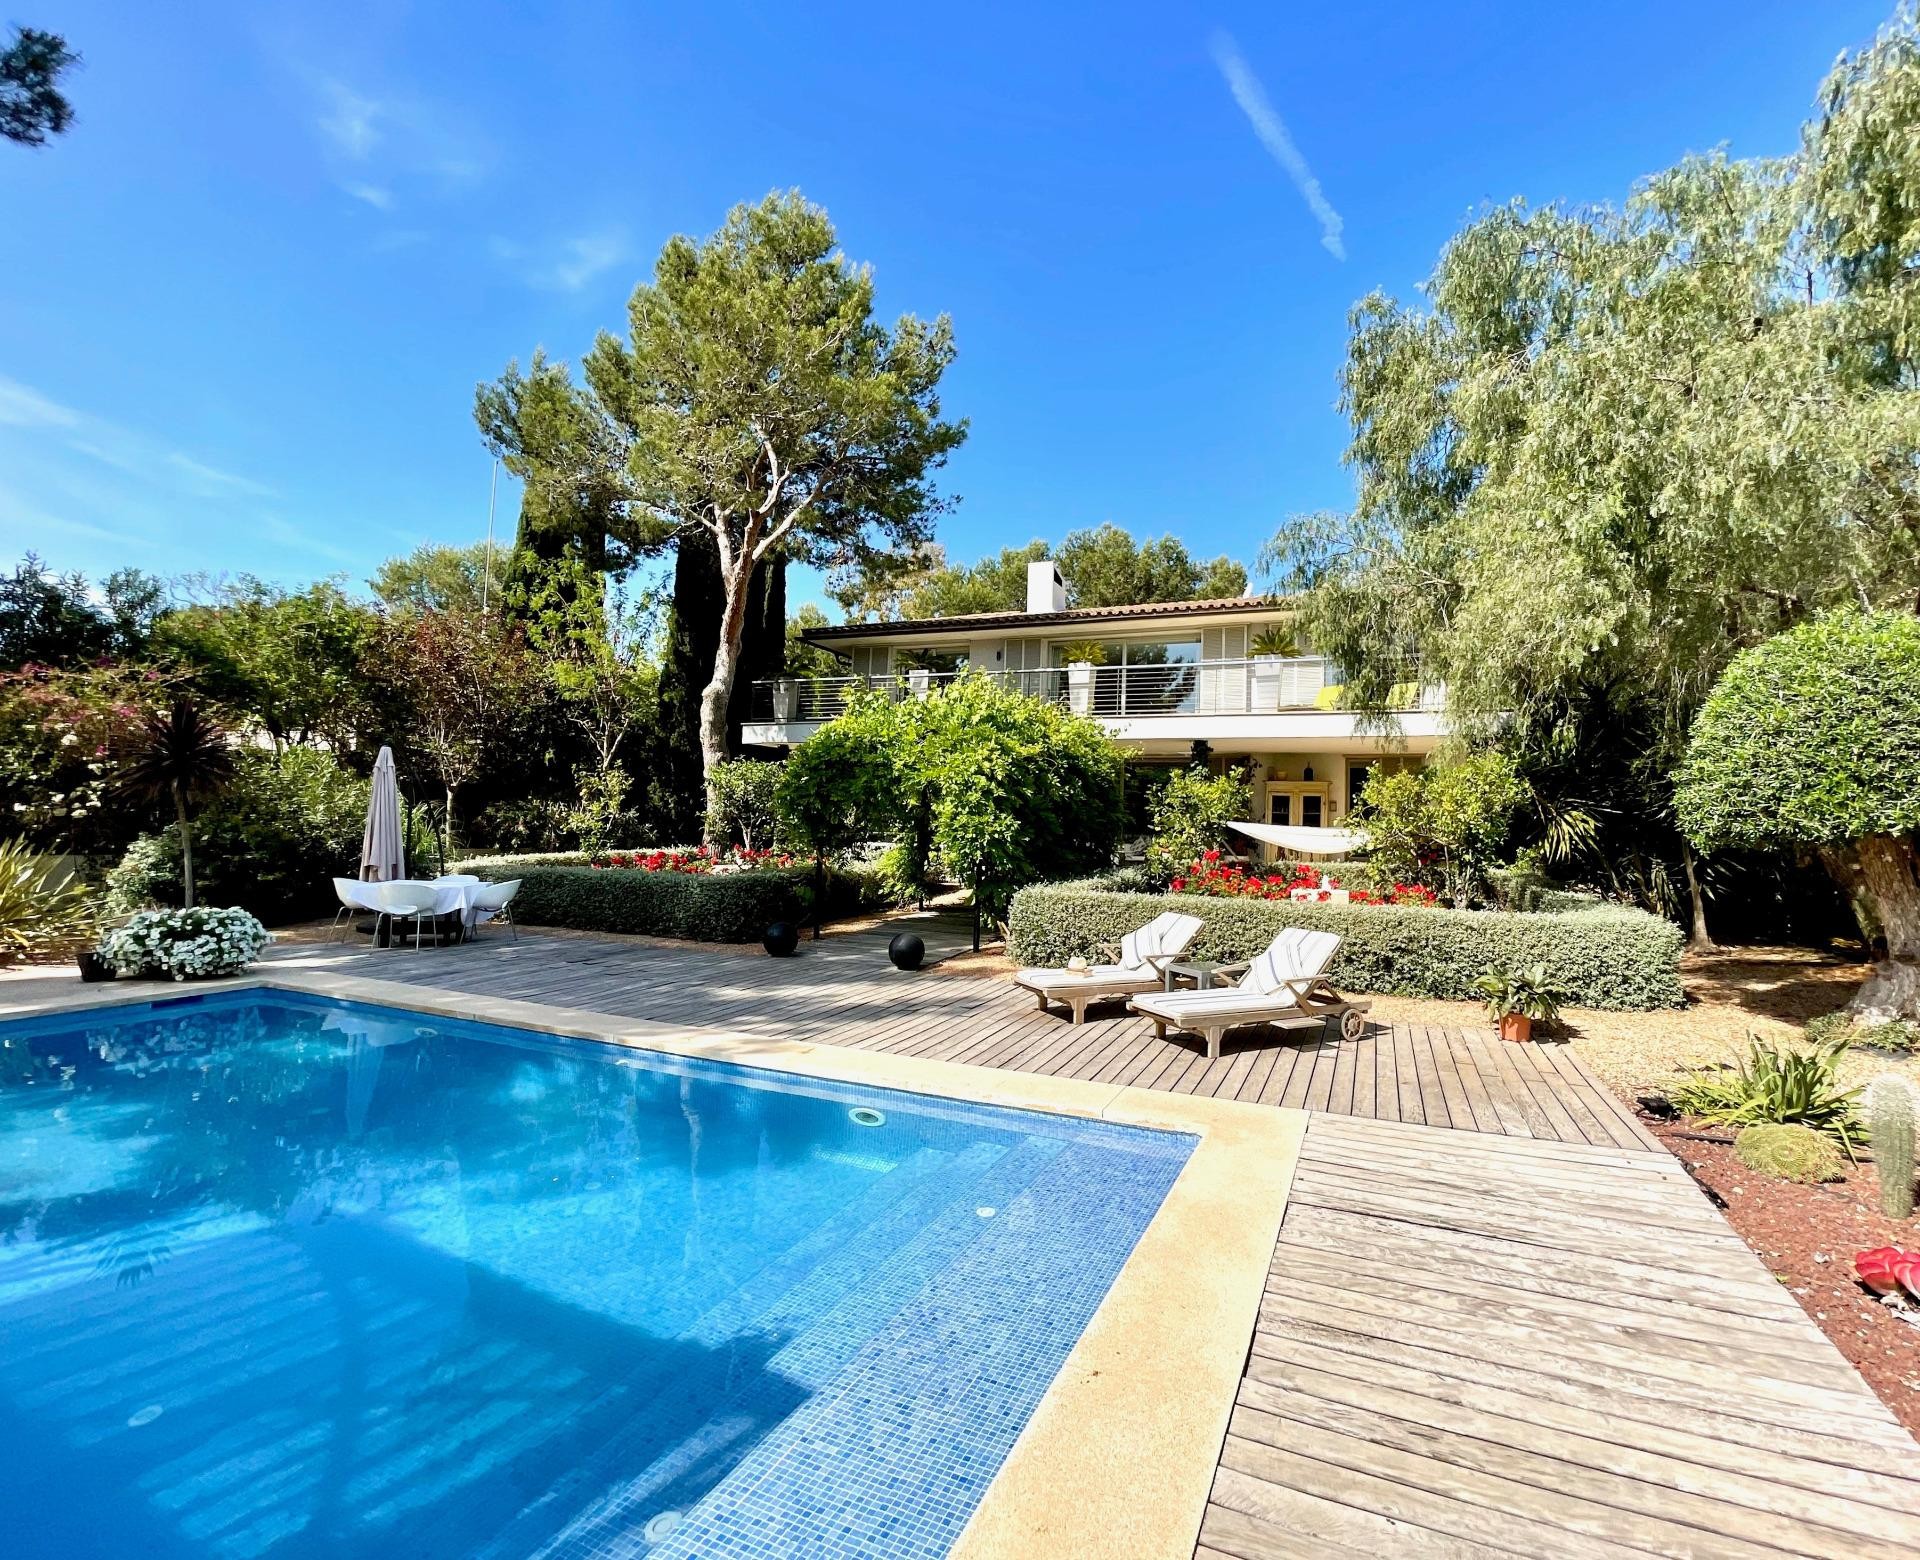 Villa with swimming pool and Mediterranean garden in Sol de Mallorca, close to beautiful bays